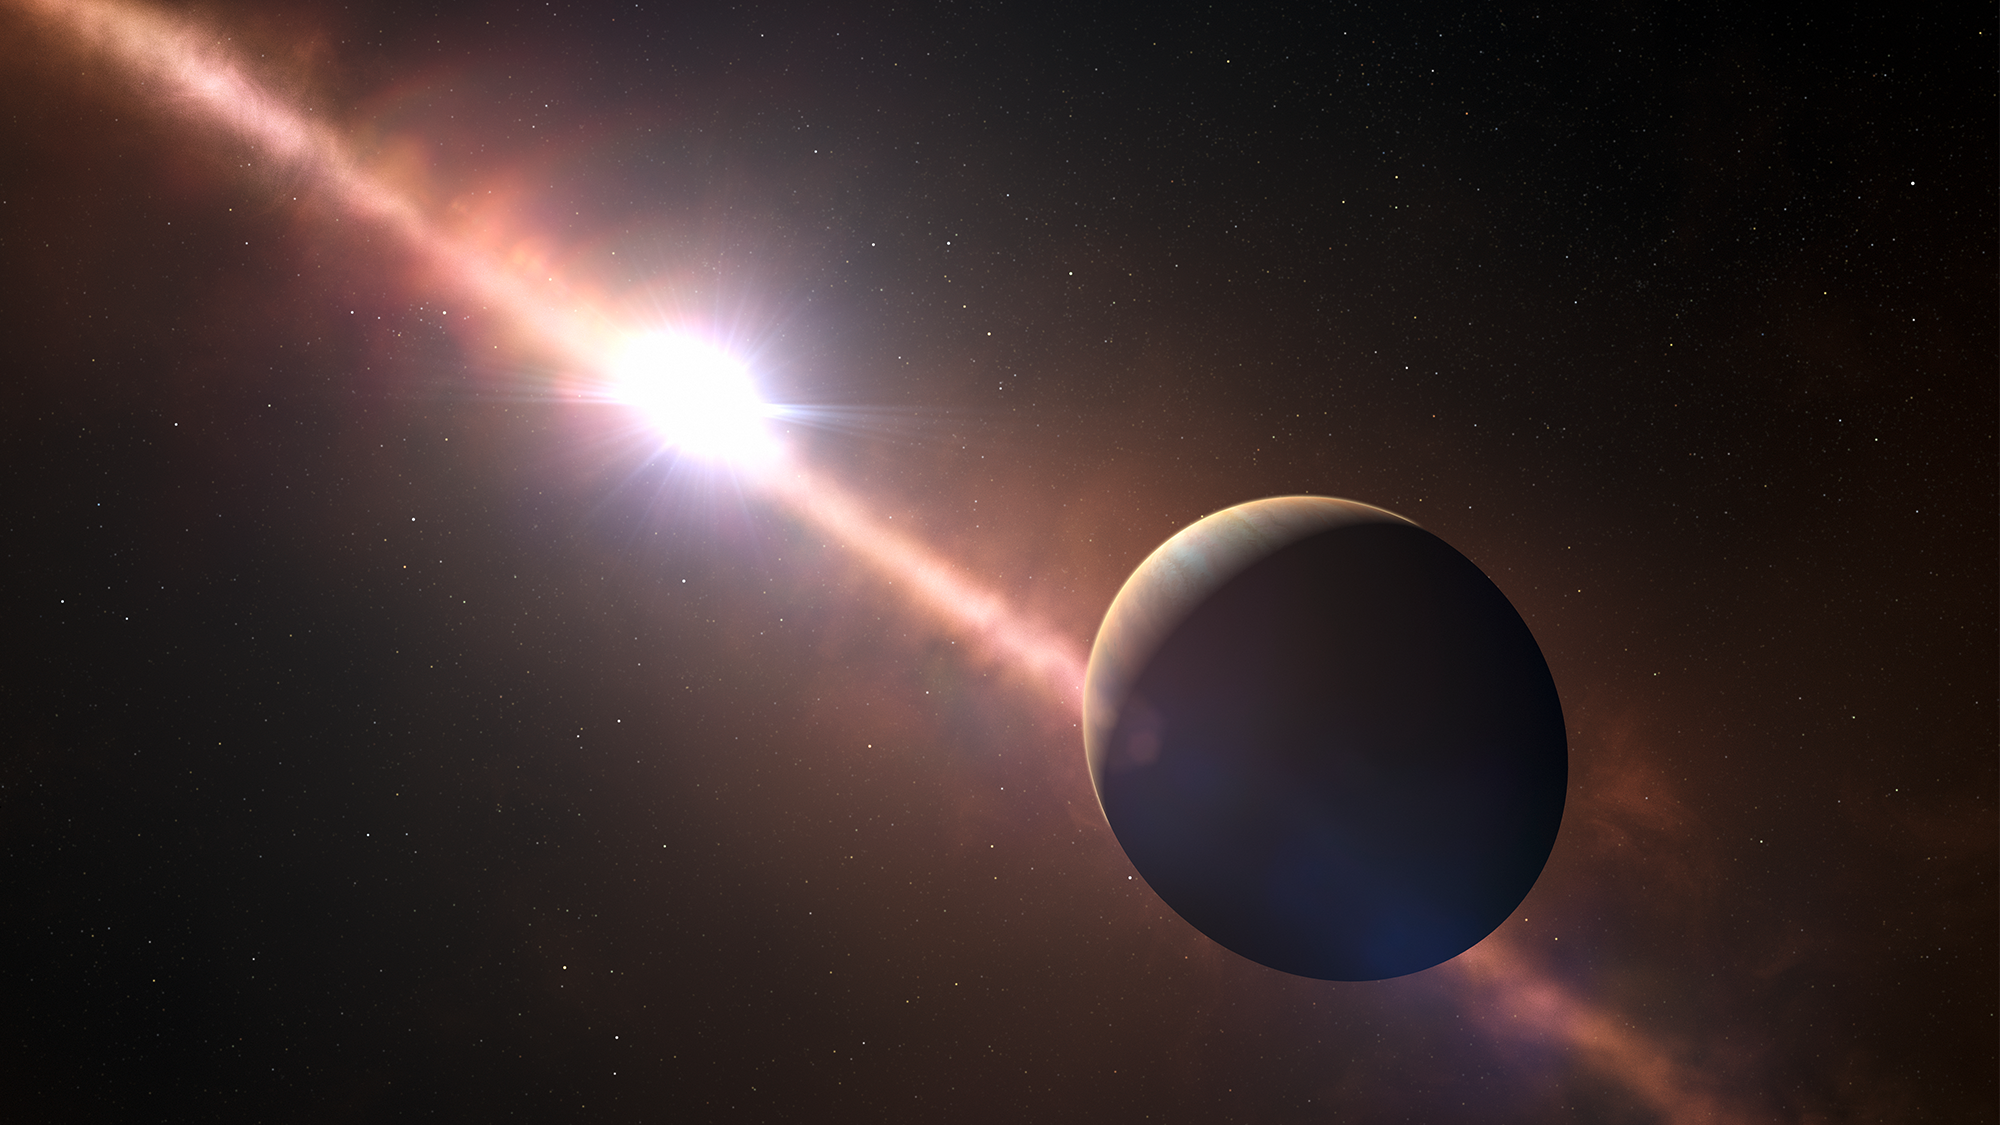 An artist’s impression of the planet Beta Pictoris b orbiting its star.